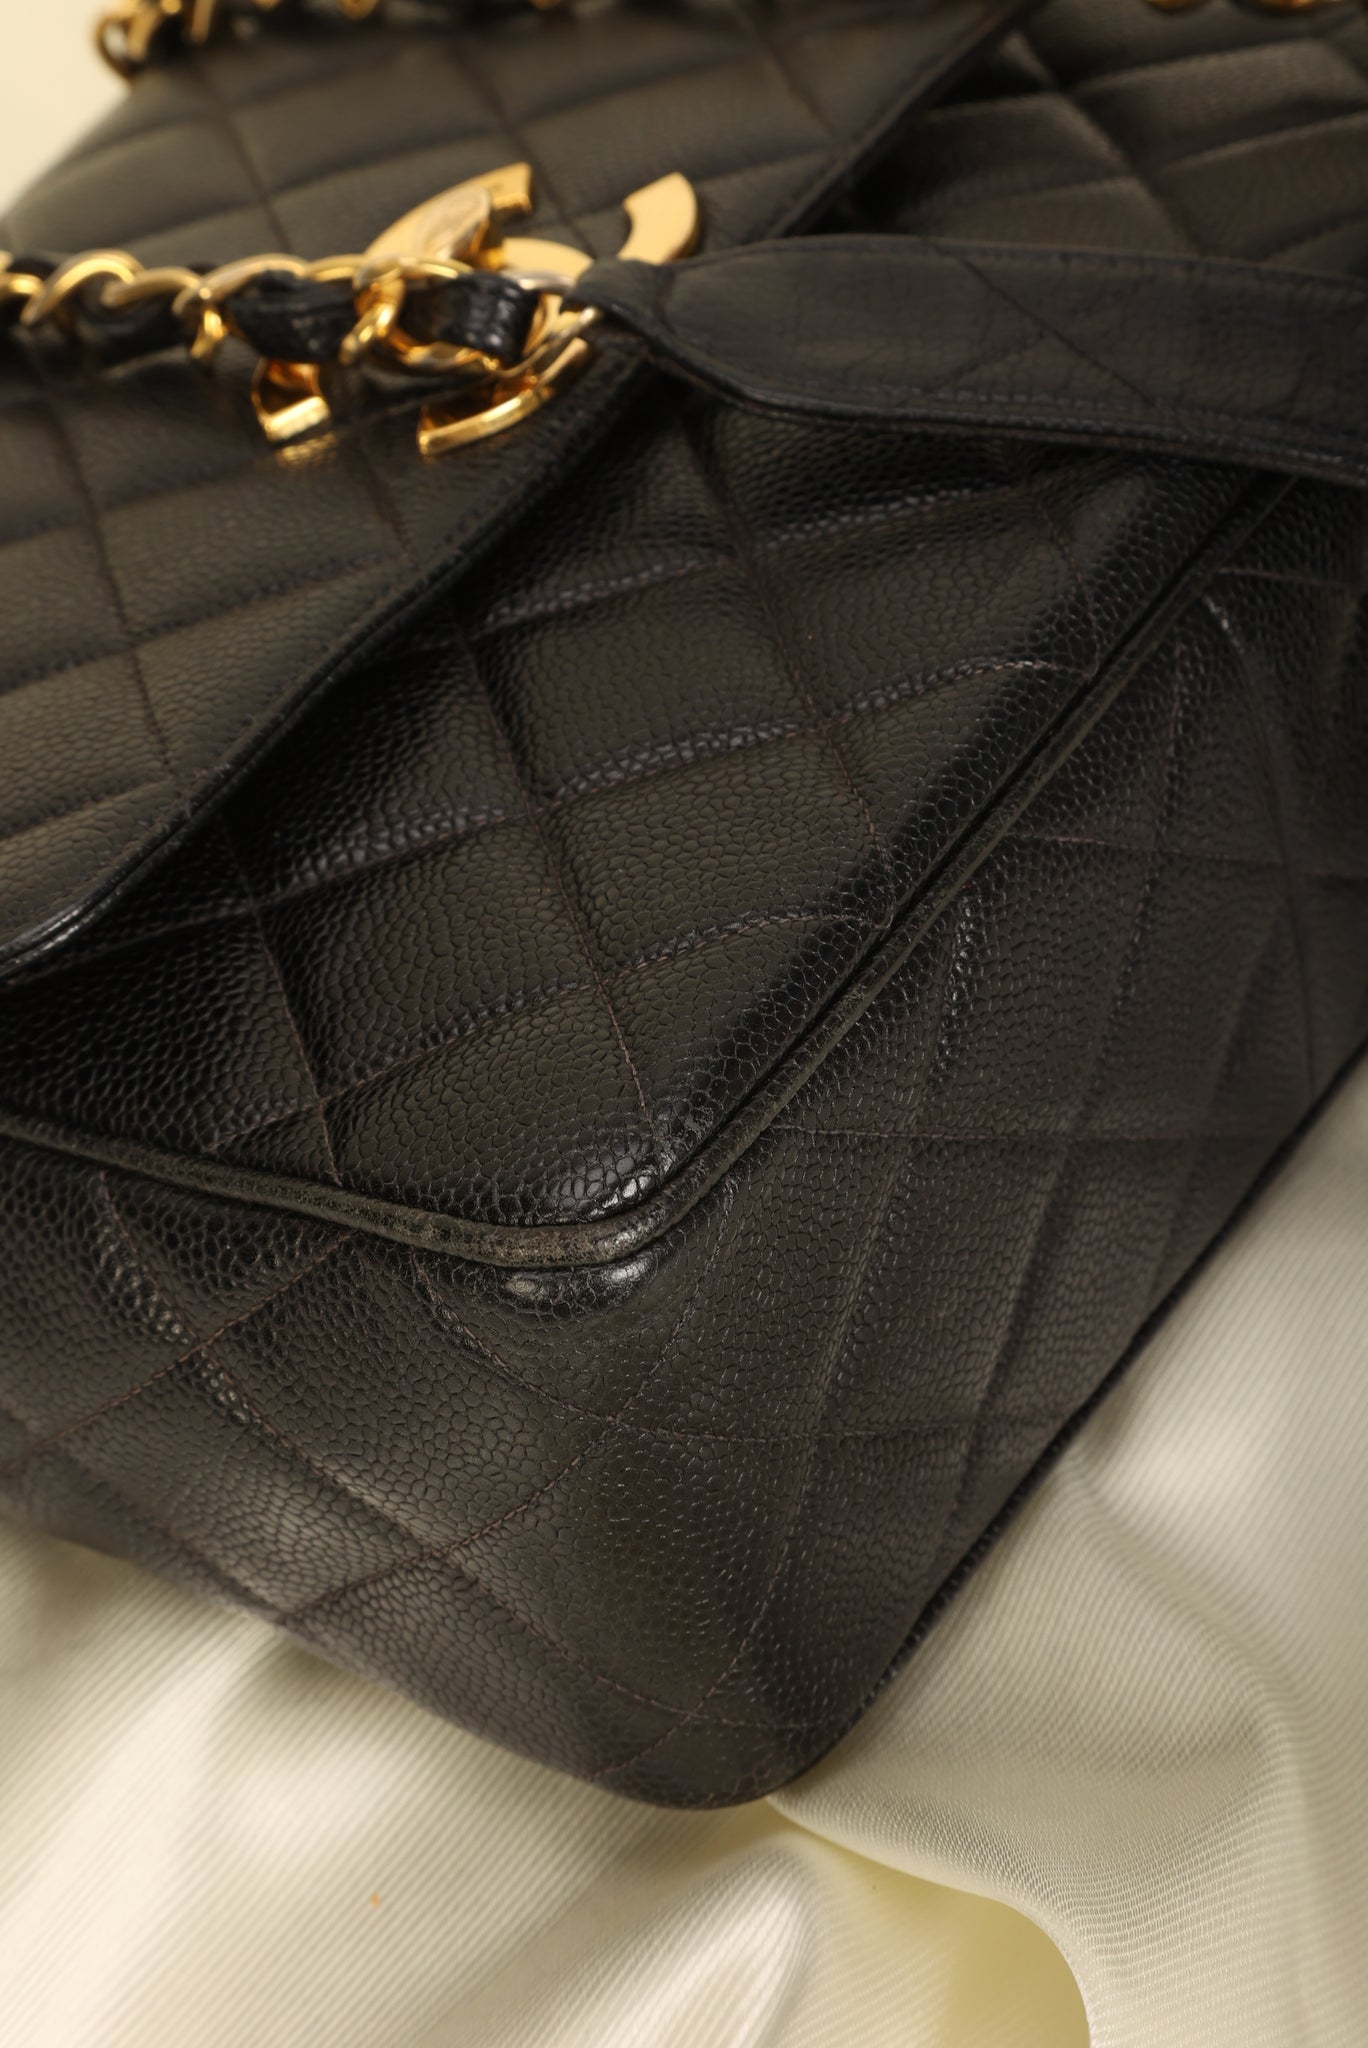 Chanel Caviar Square Flap Bag